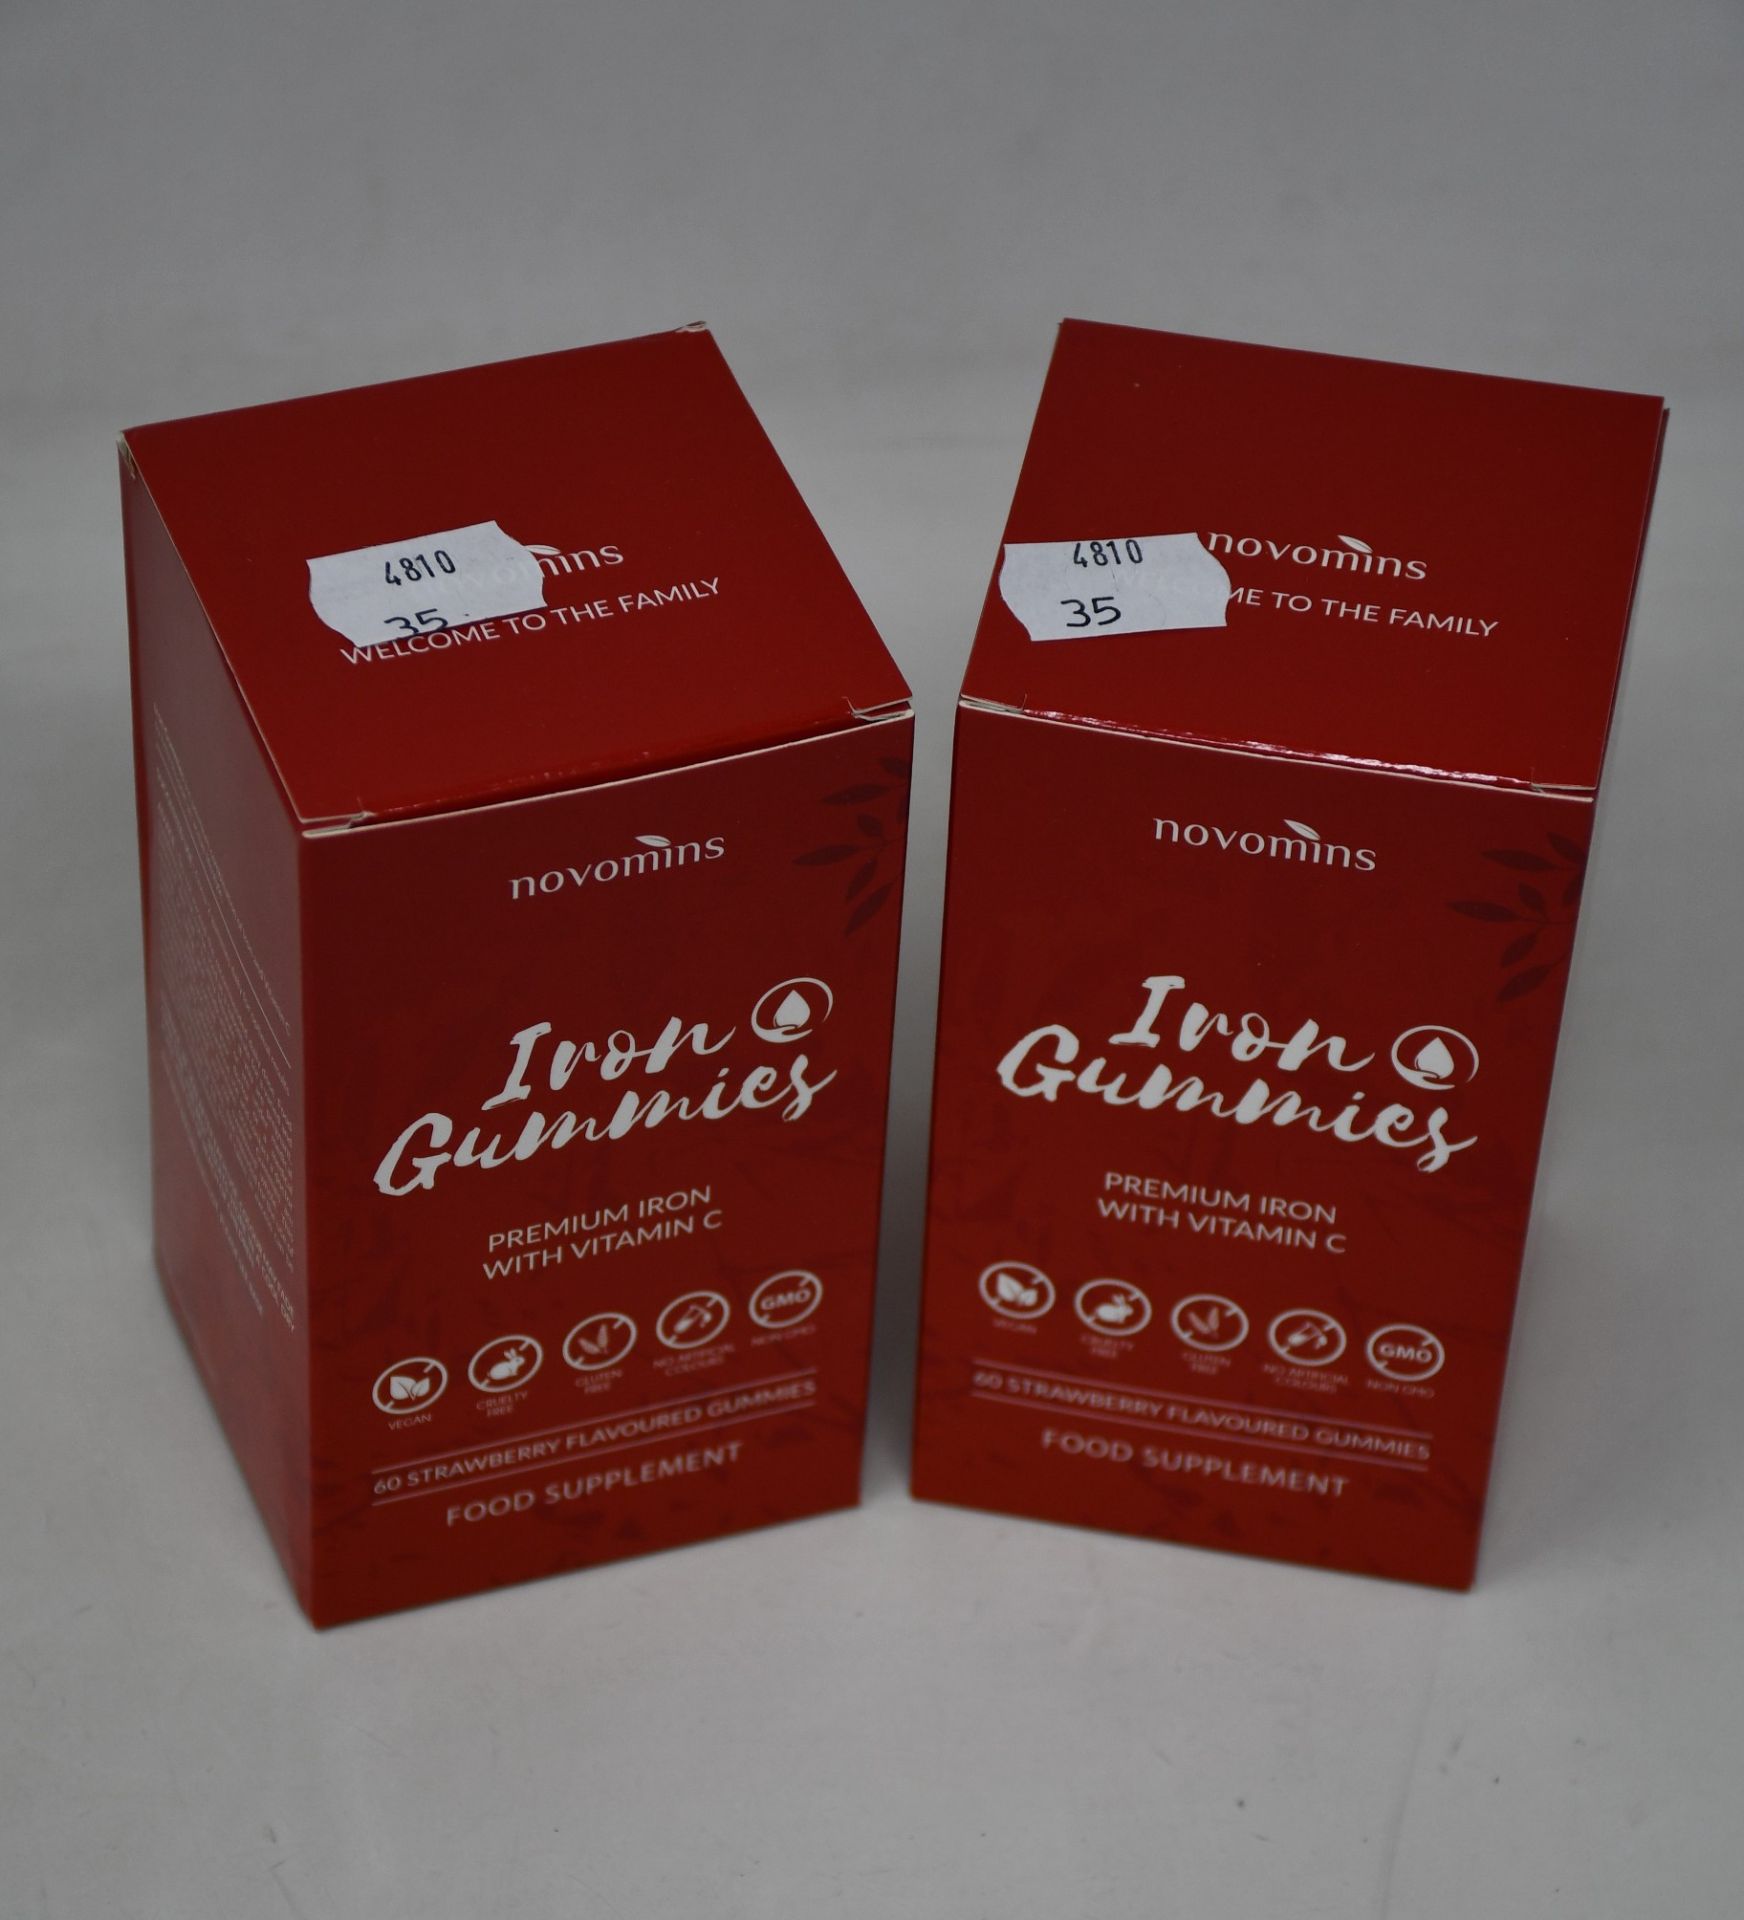 Twelve Novomins premium iron with vitamin C strawberry flavoured gummies (12 x 60 gummies).